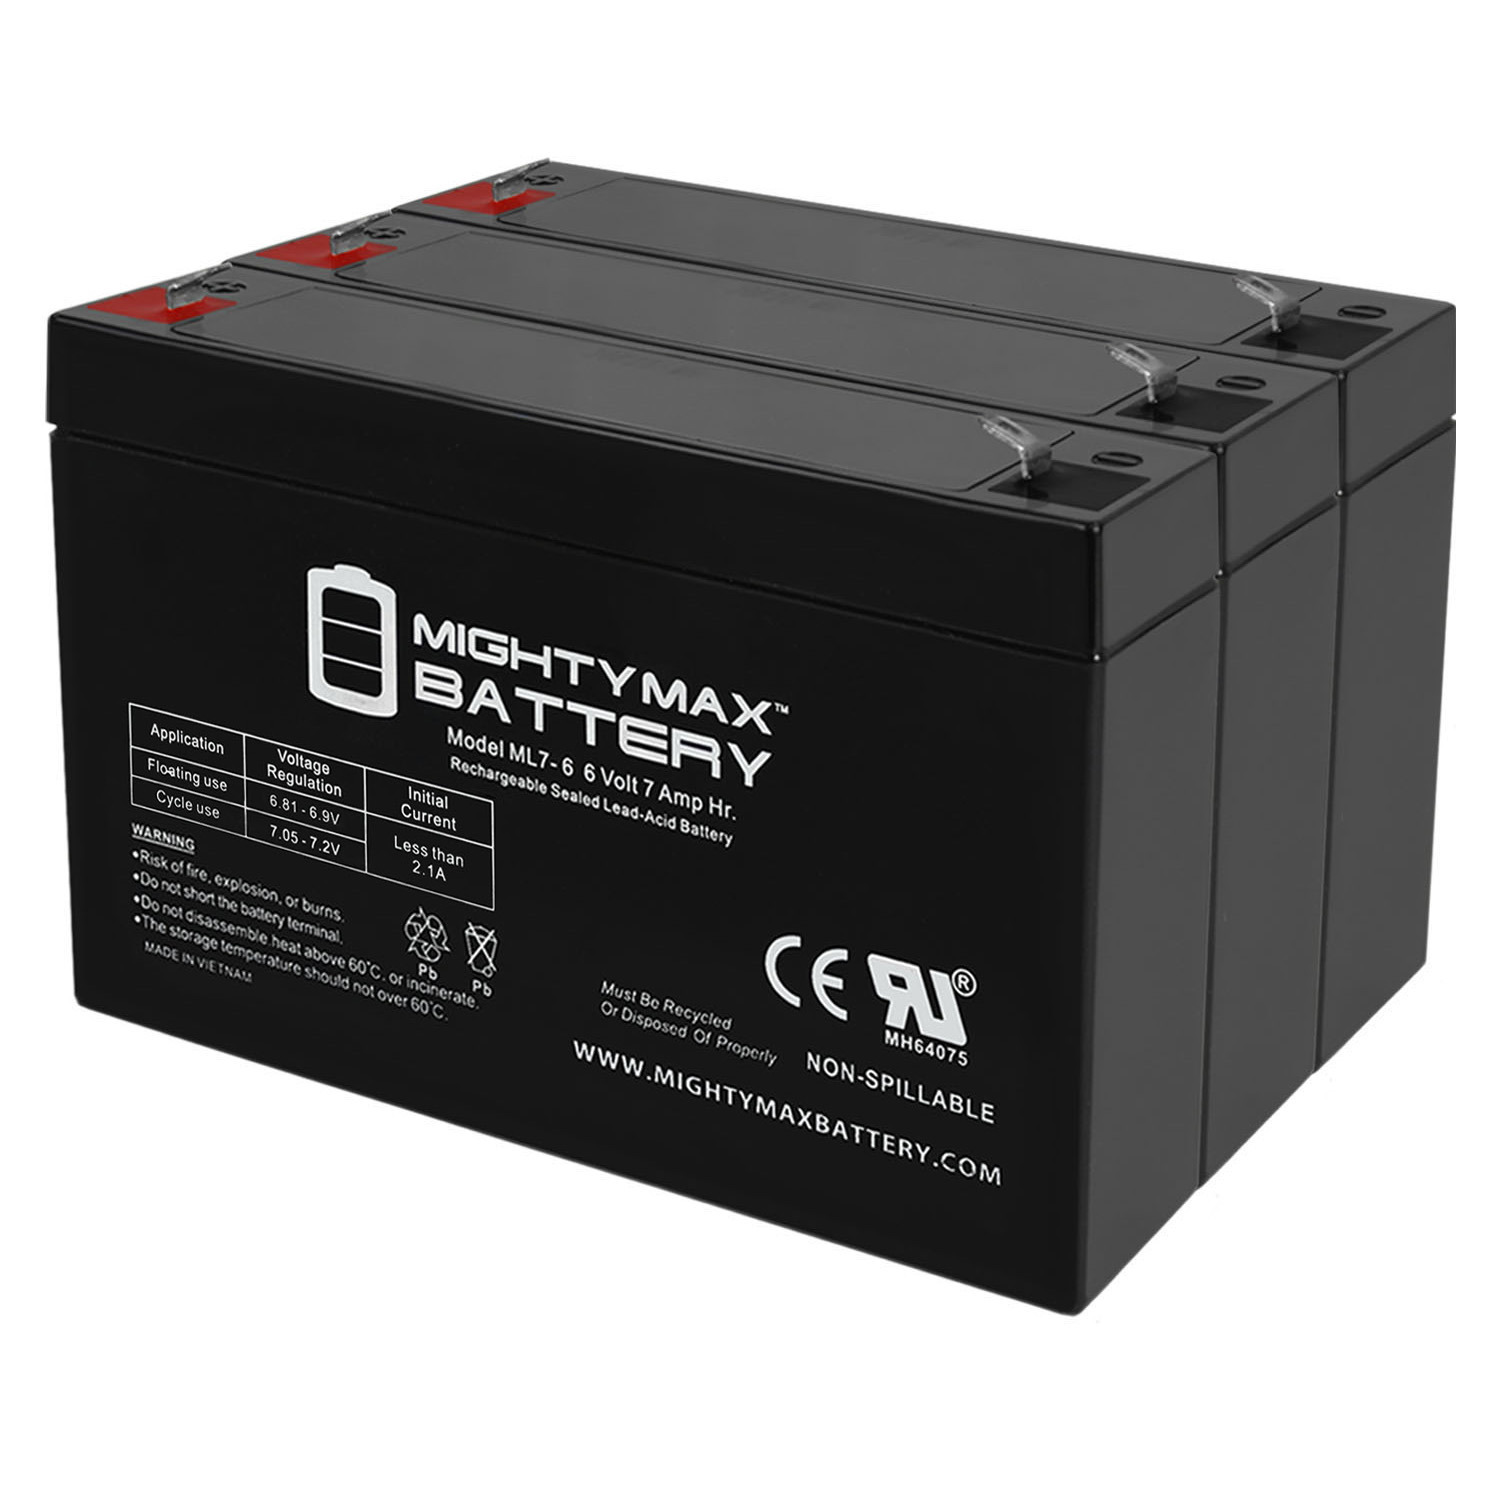 6V 7Ah UPS Battery for Sure Light AA2 - 3 Pack